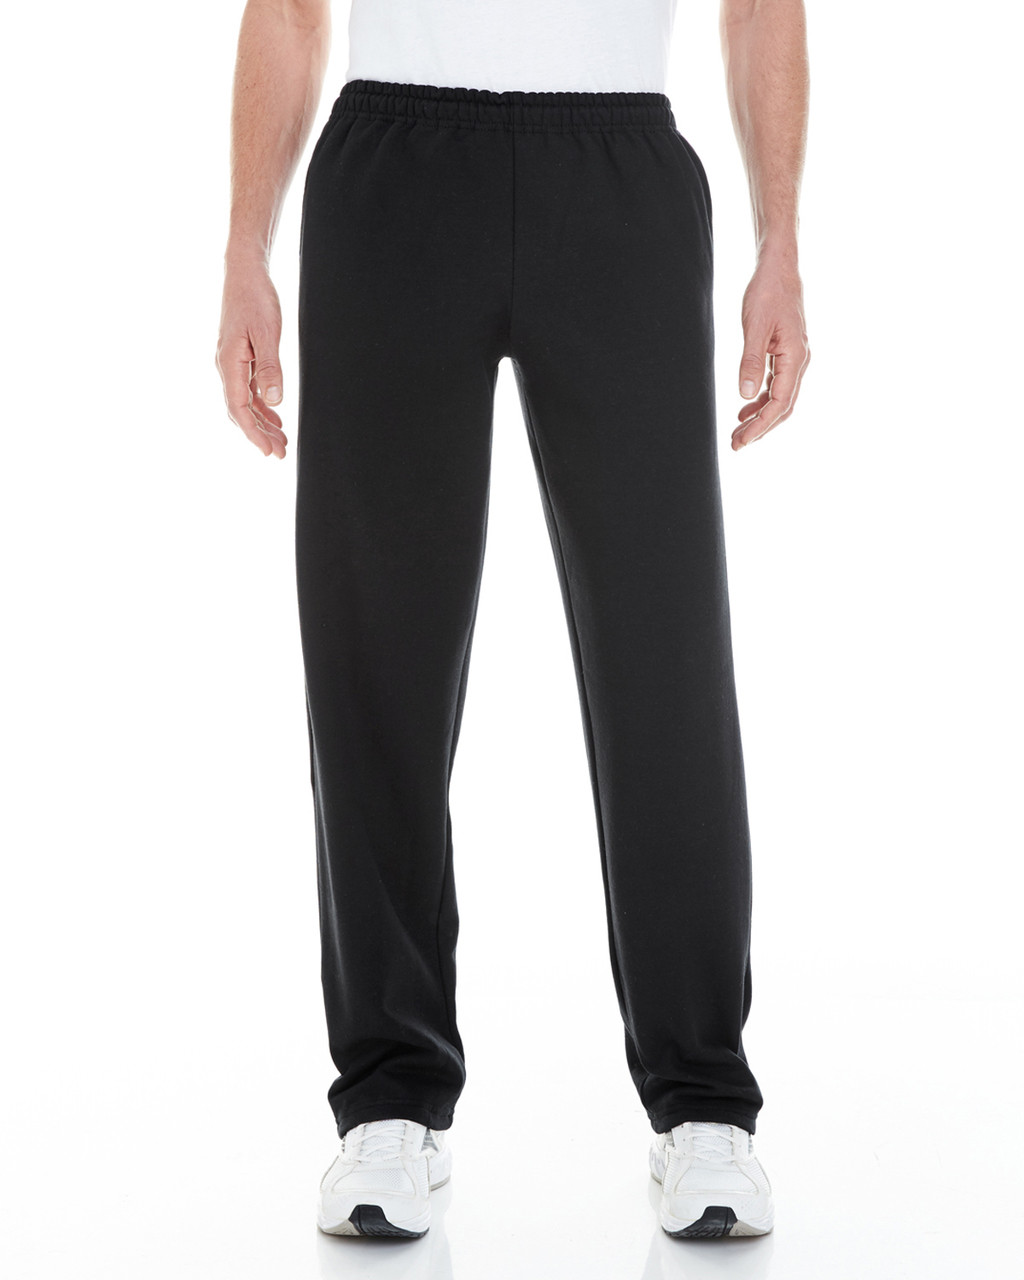 Style G18300 Gildan Mens Fleece Open Bottom Sweatpants with Pockets